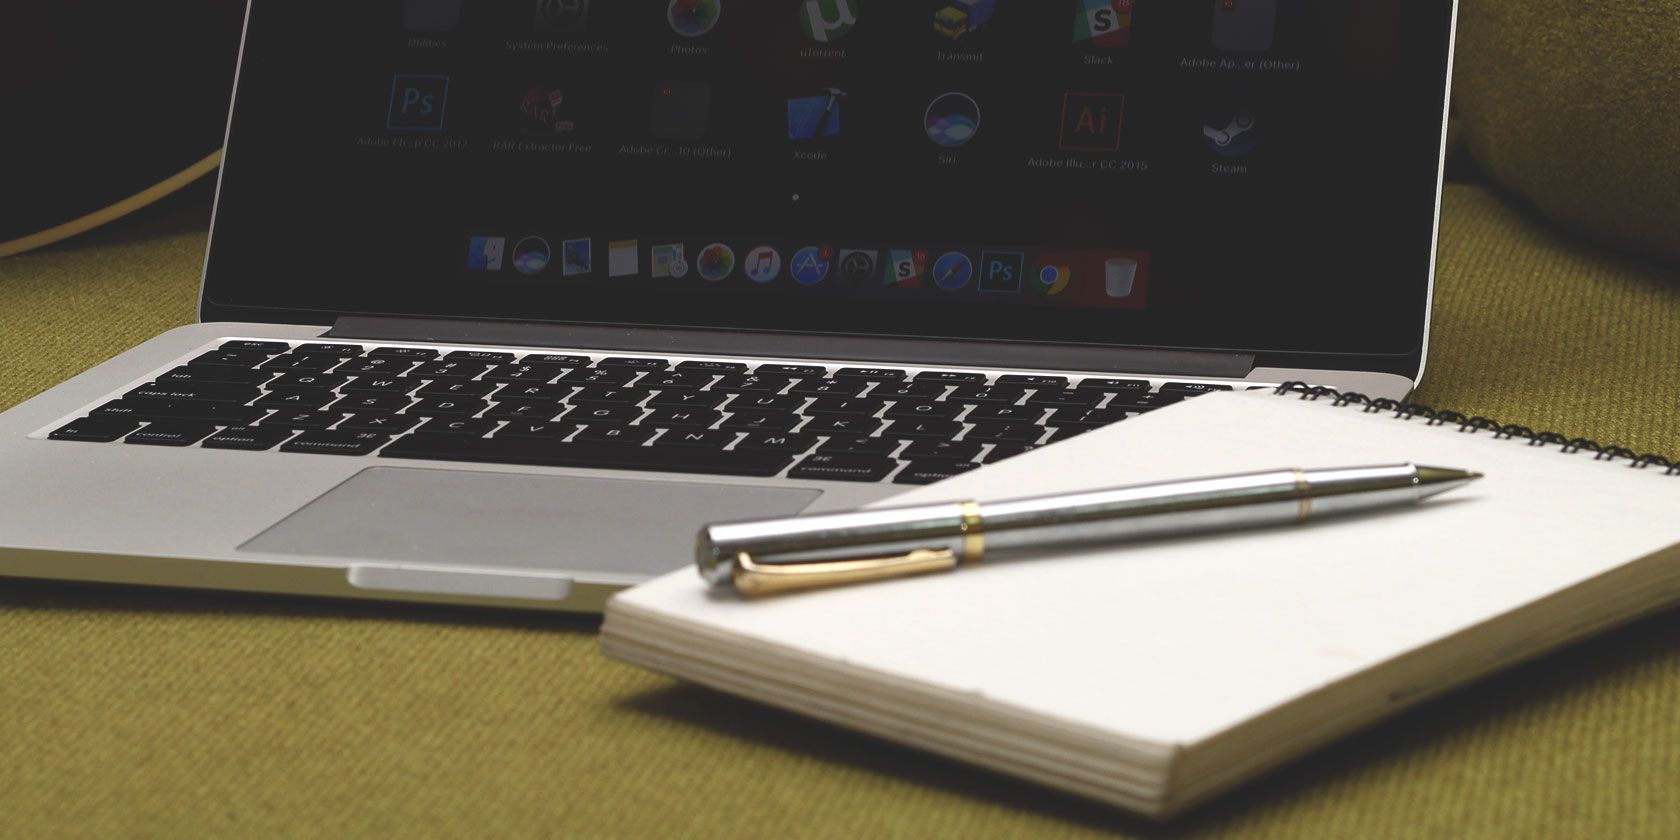 diary writing app for mac free